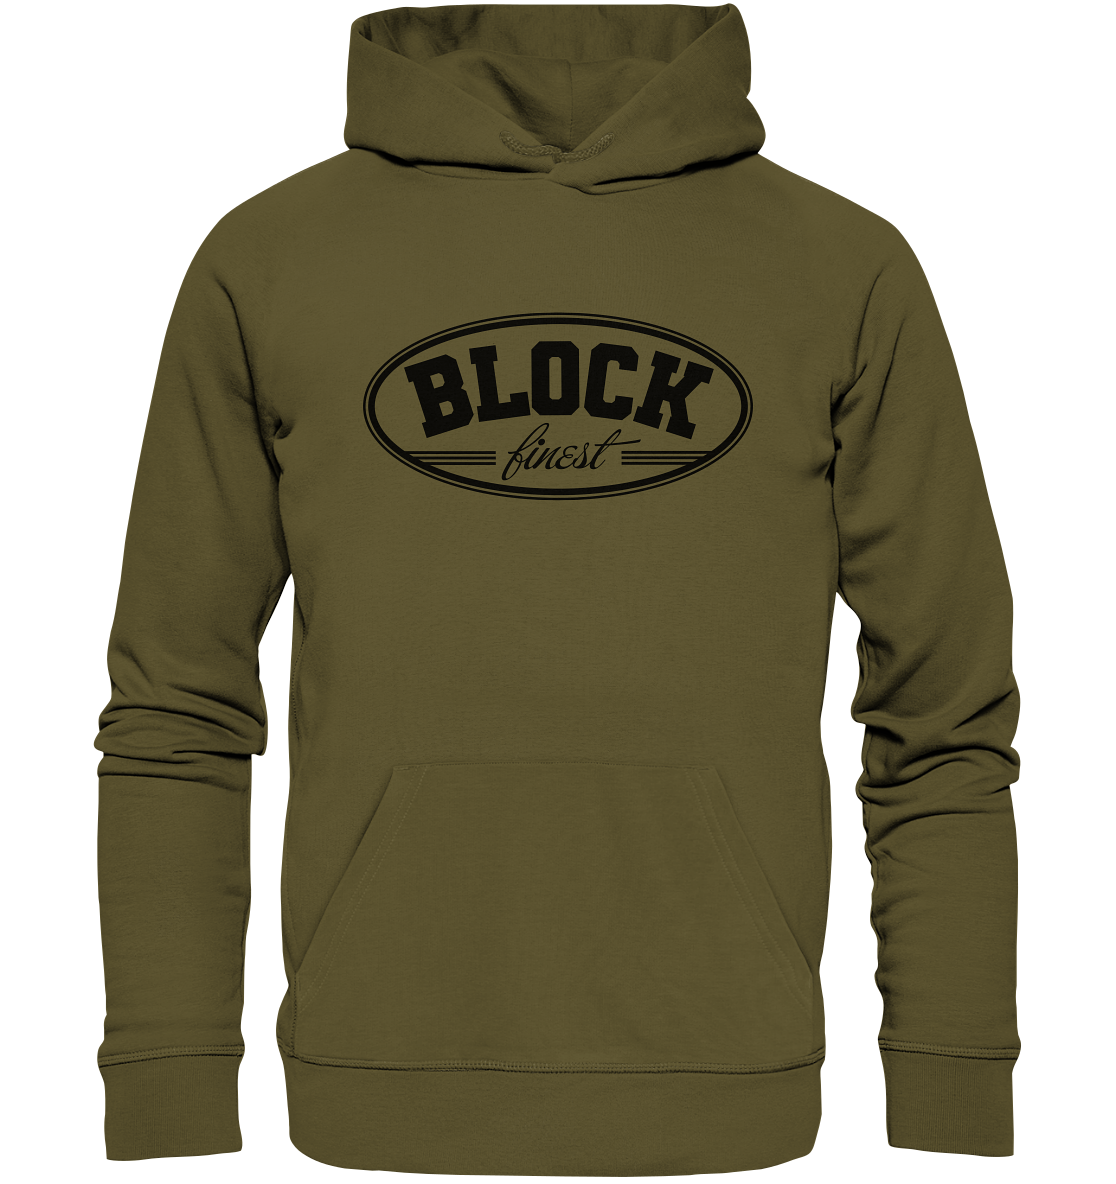 N.O.S.W. BLOCK Fanblock Hoodie "BLOCK finest" Männer Organic Kapuzenpullover khaki